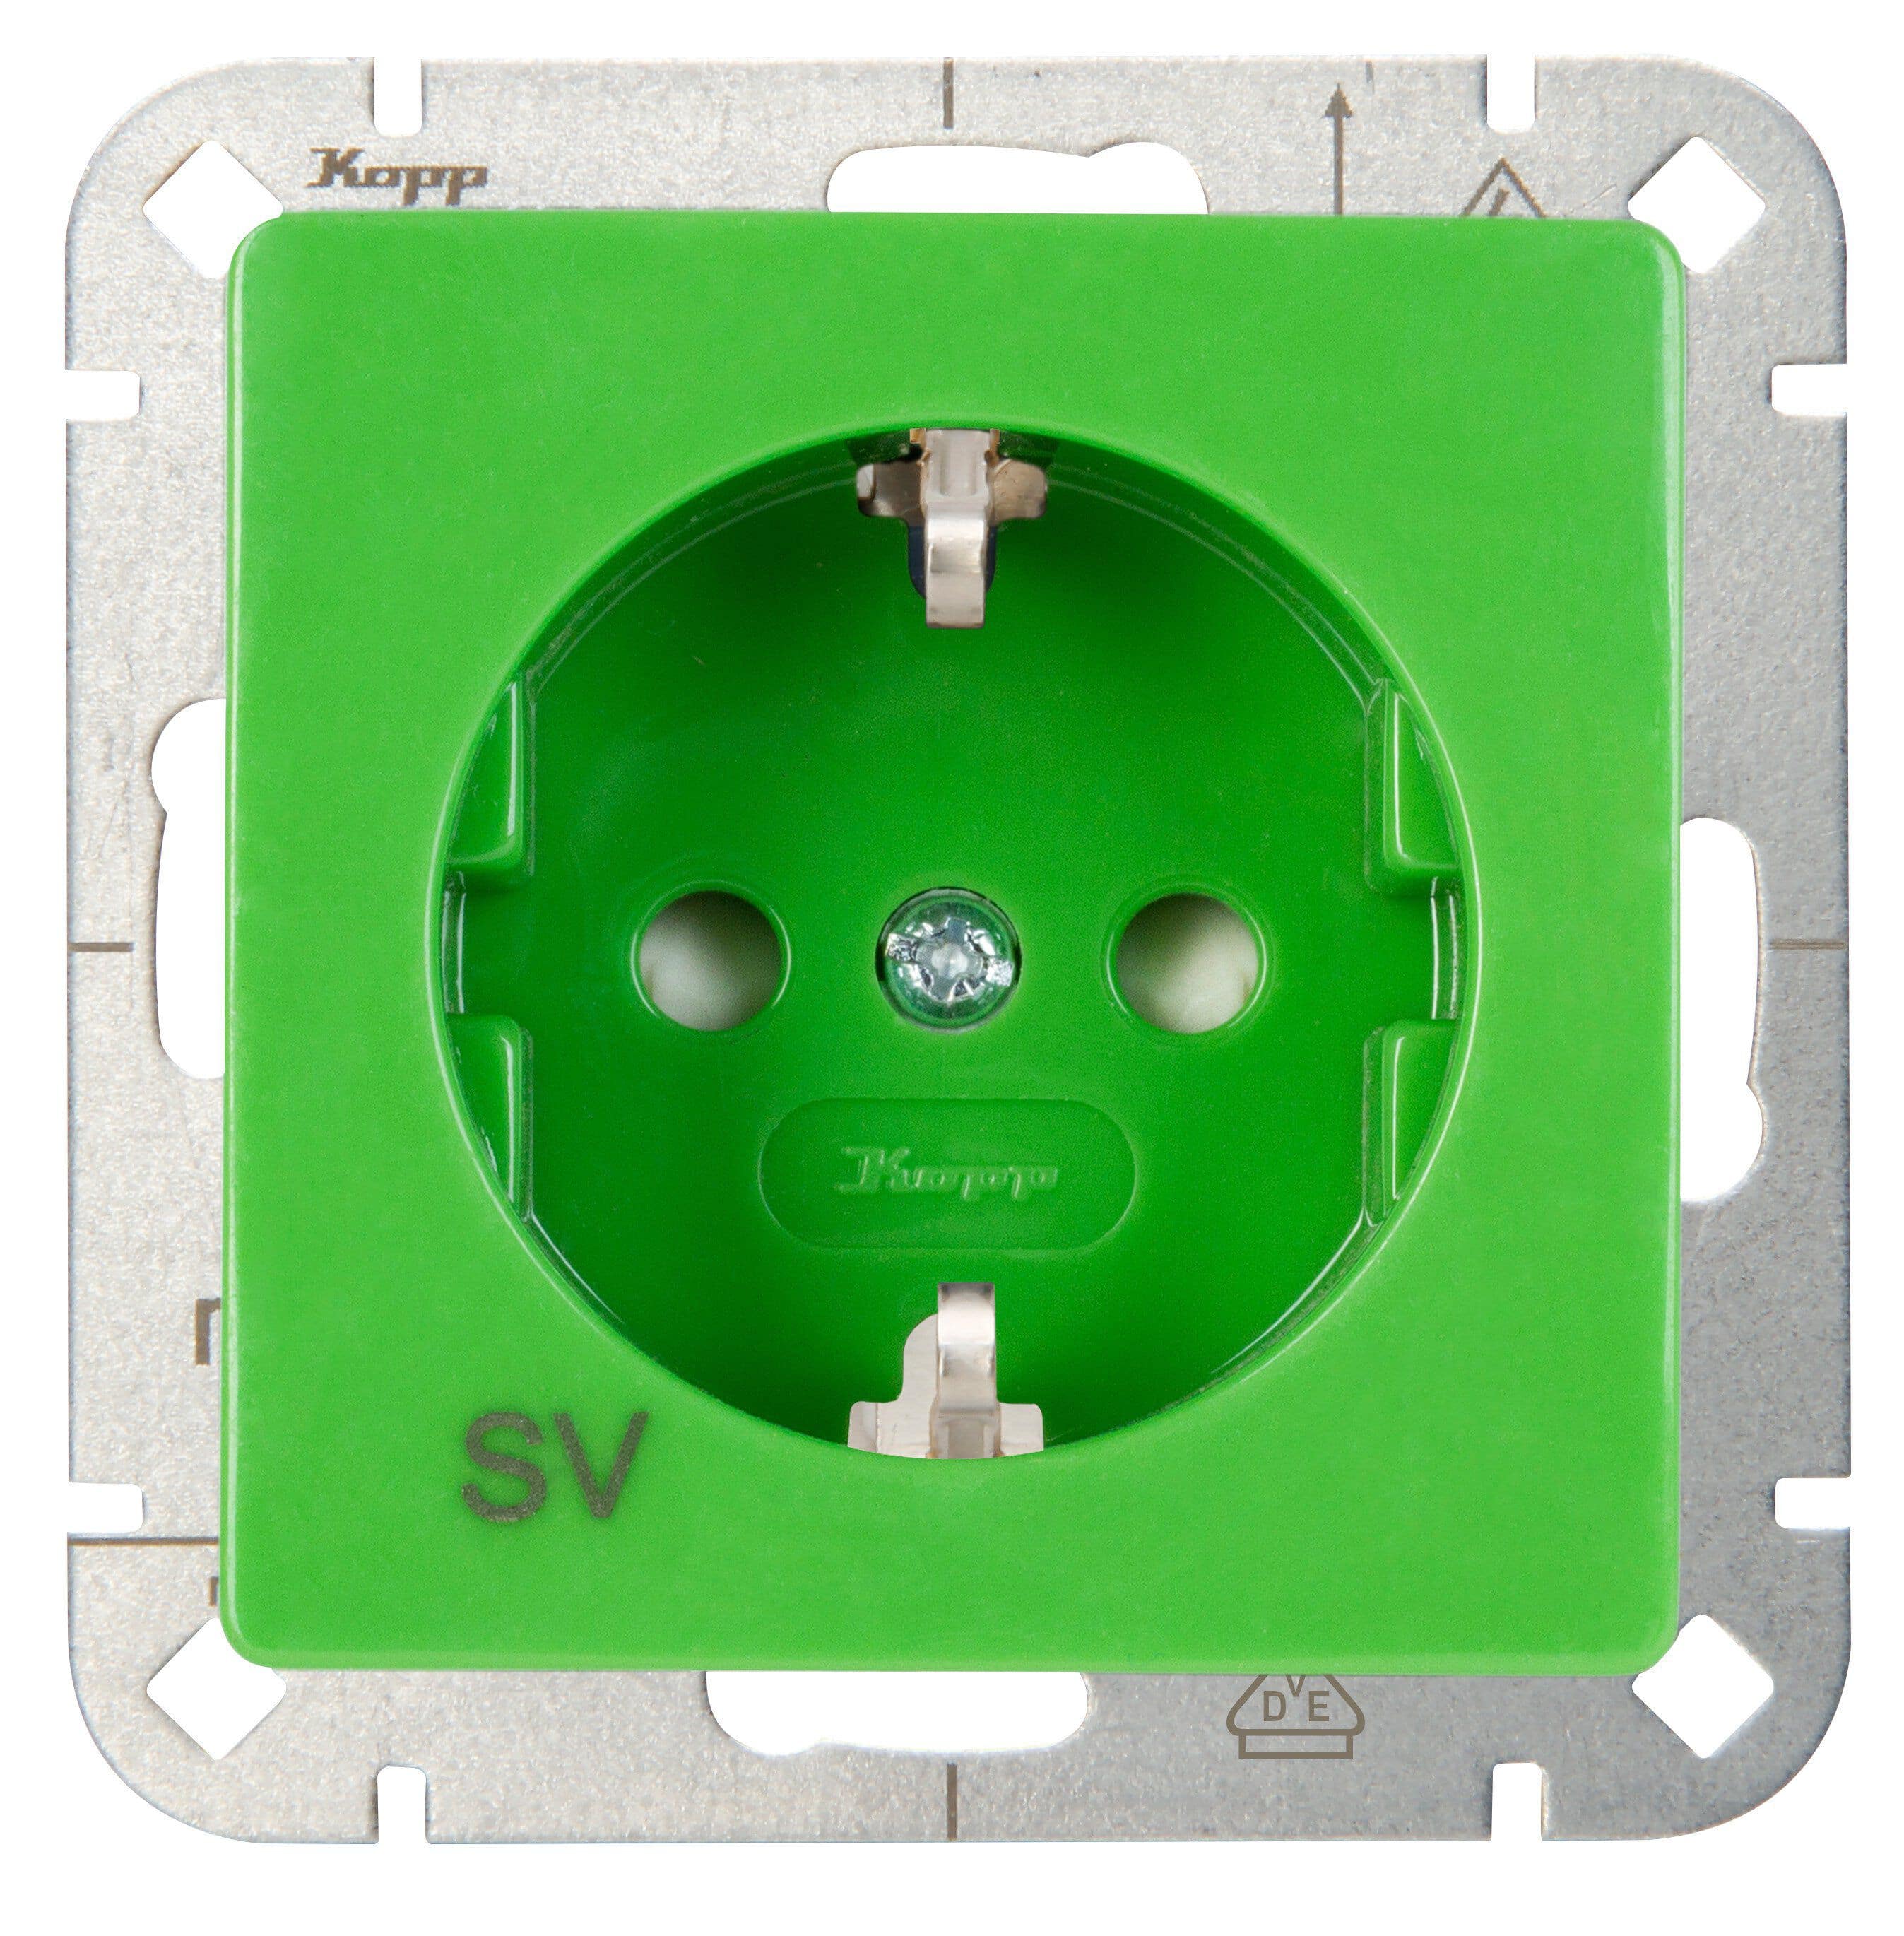 Kopp 920608008 Schutzkontakt-Steckdose mit erhöhtem Berührungsschutz, grün